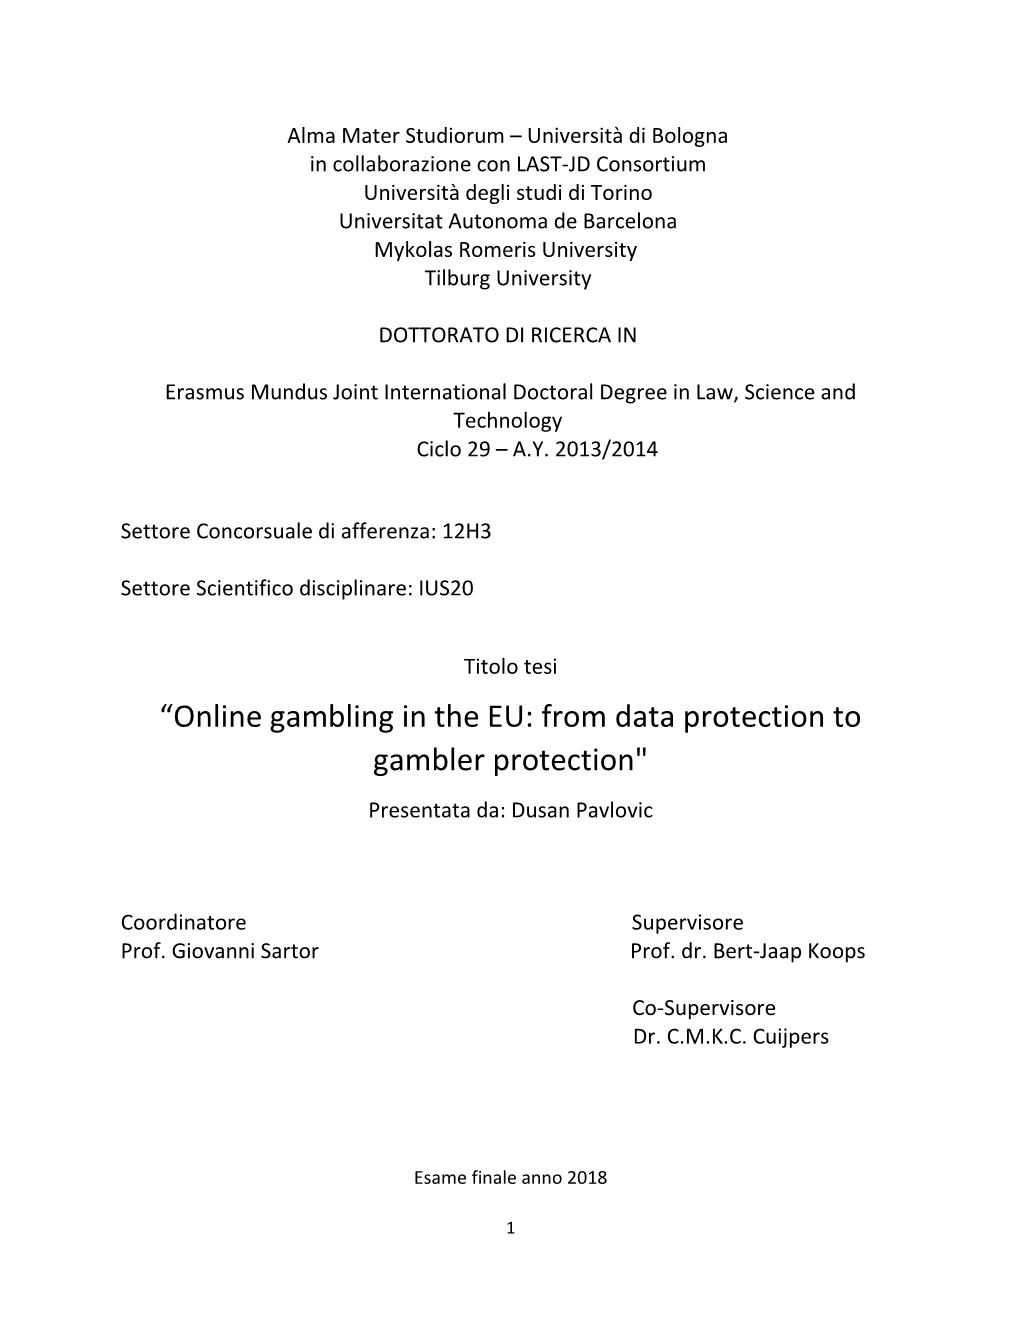 “Online Gambling in the EU: from Data Protection to Gambler Protection" Presentata Da: Dusan Pavlovic